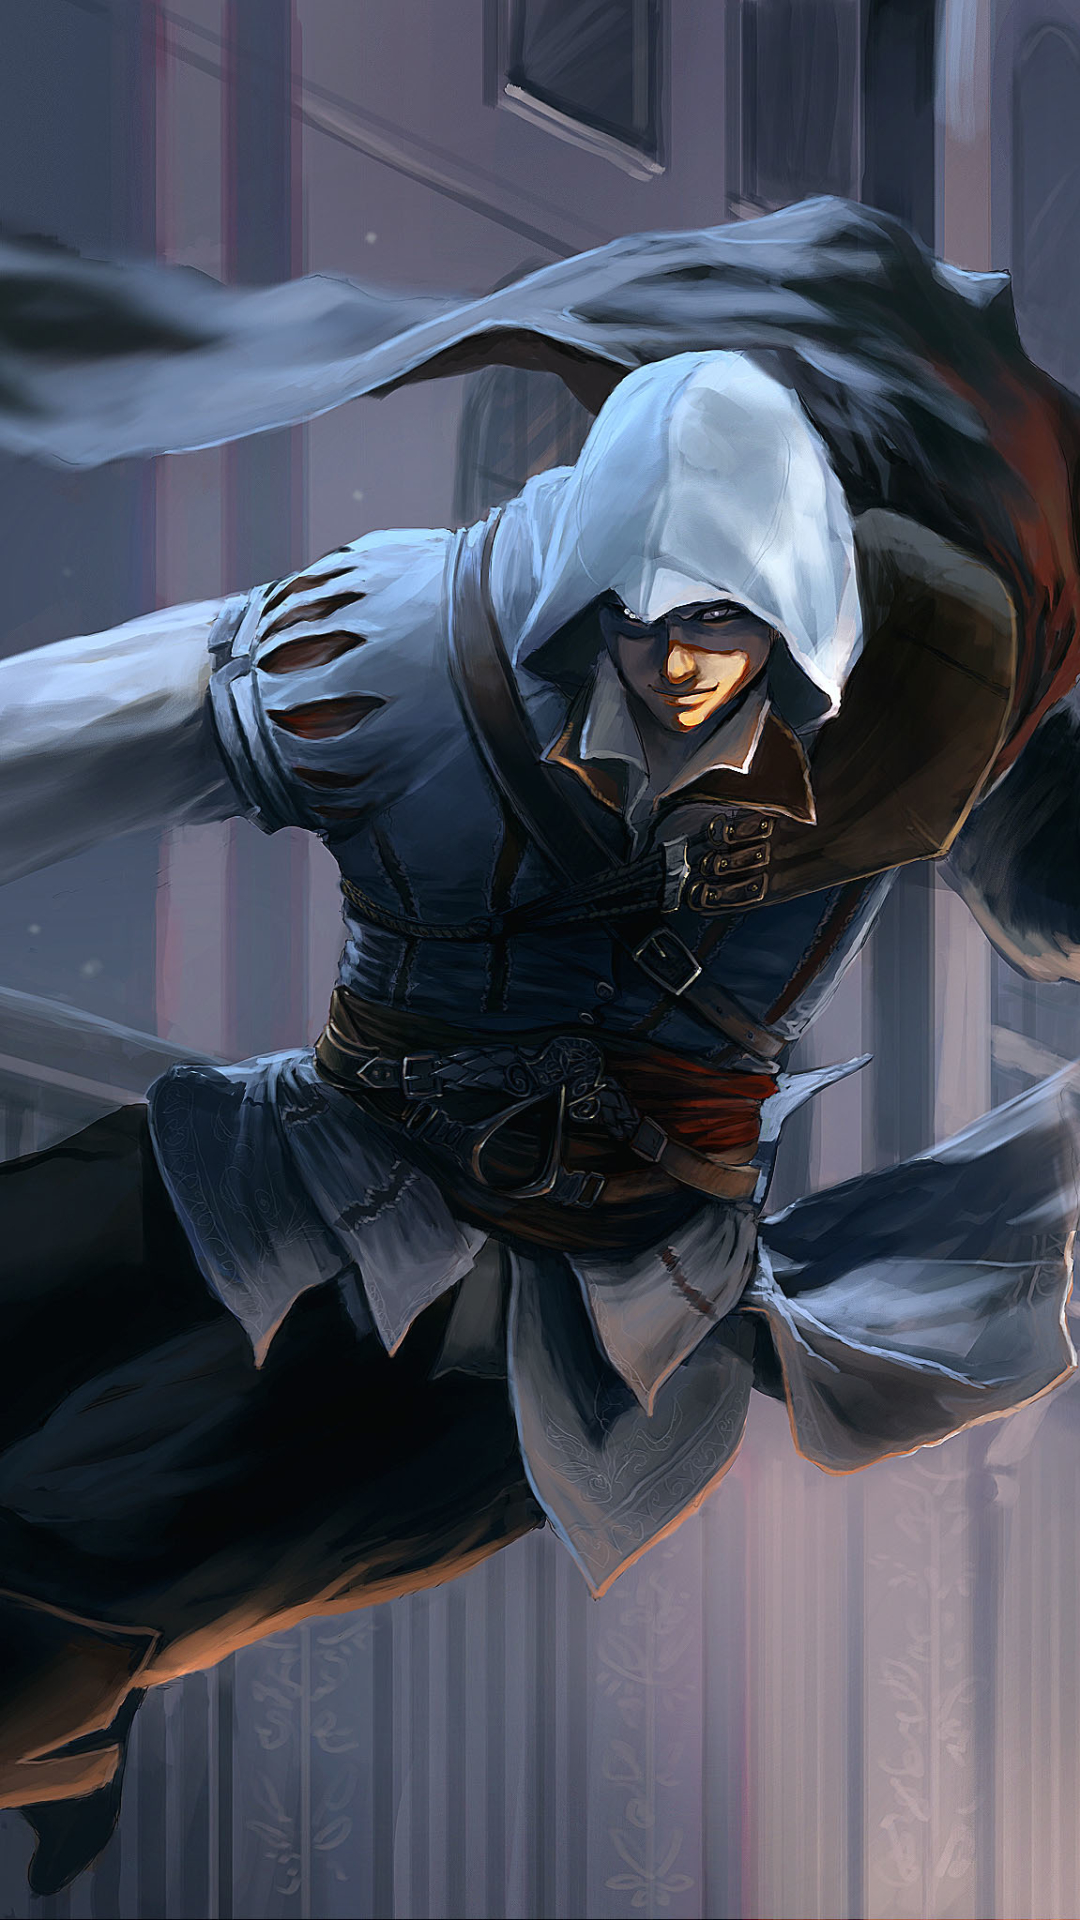 Descarga gratuita de fondo de pantalla para móvil de Videojuego, Assassin's Creed, Ezio (Assassin's Creed), Assassin's Creed Ii.